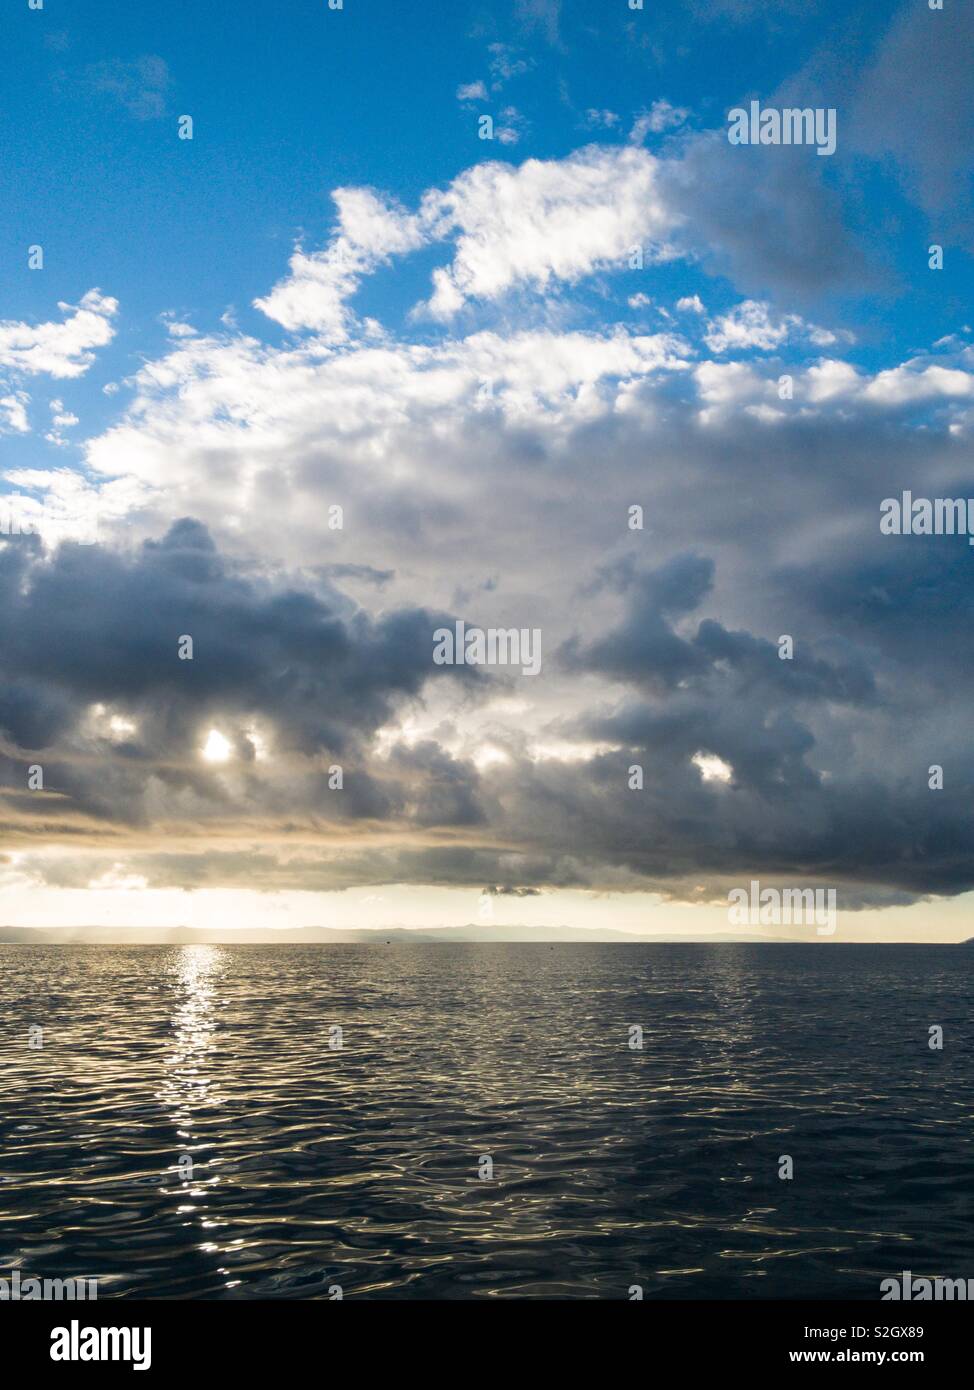 Sunlight through clouds over calm Adriatic sea Stock Photo